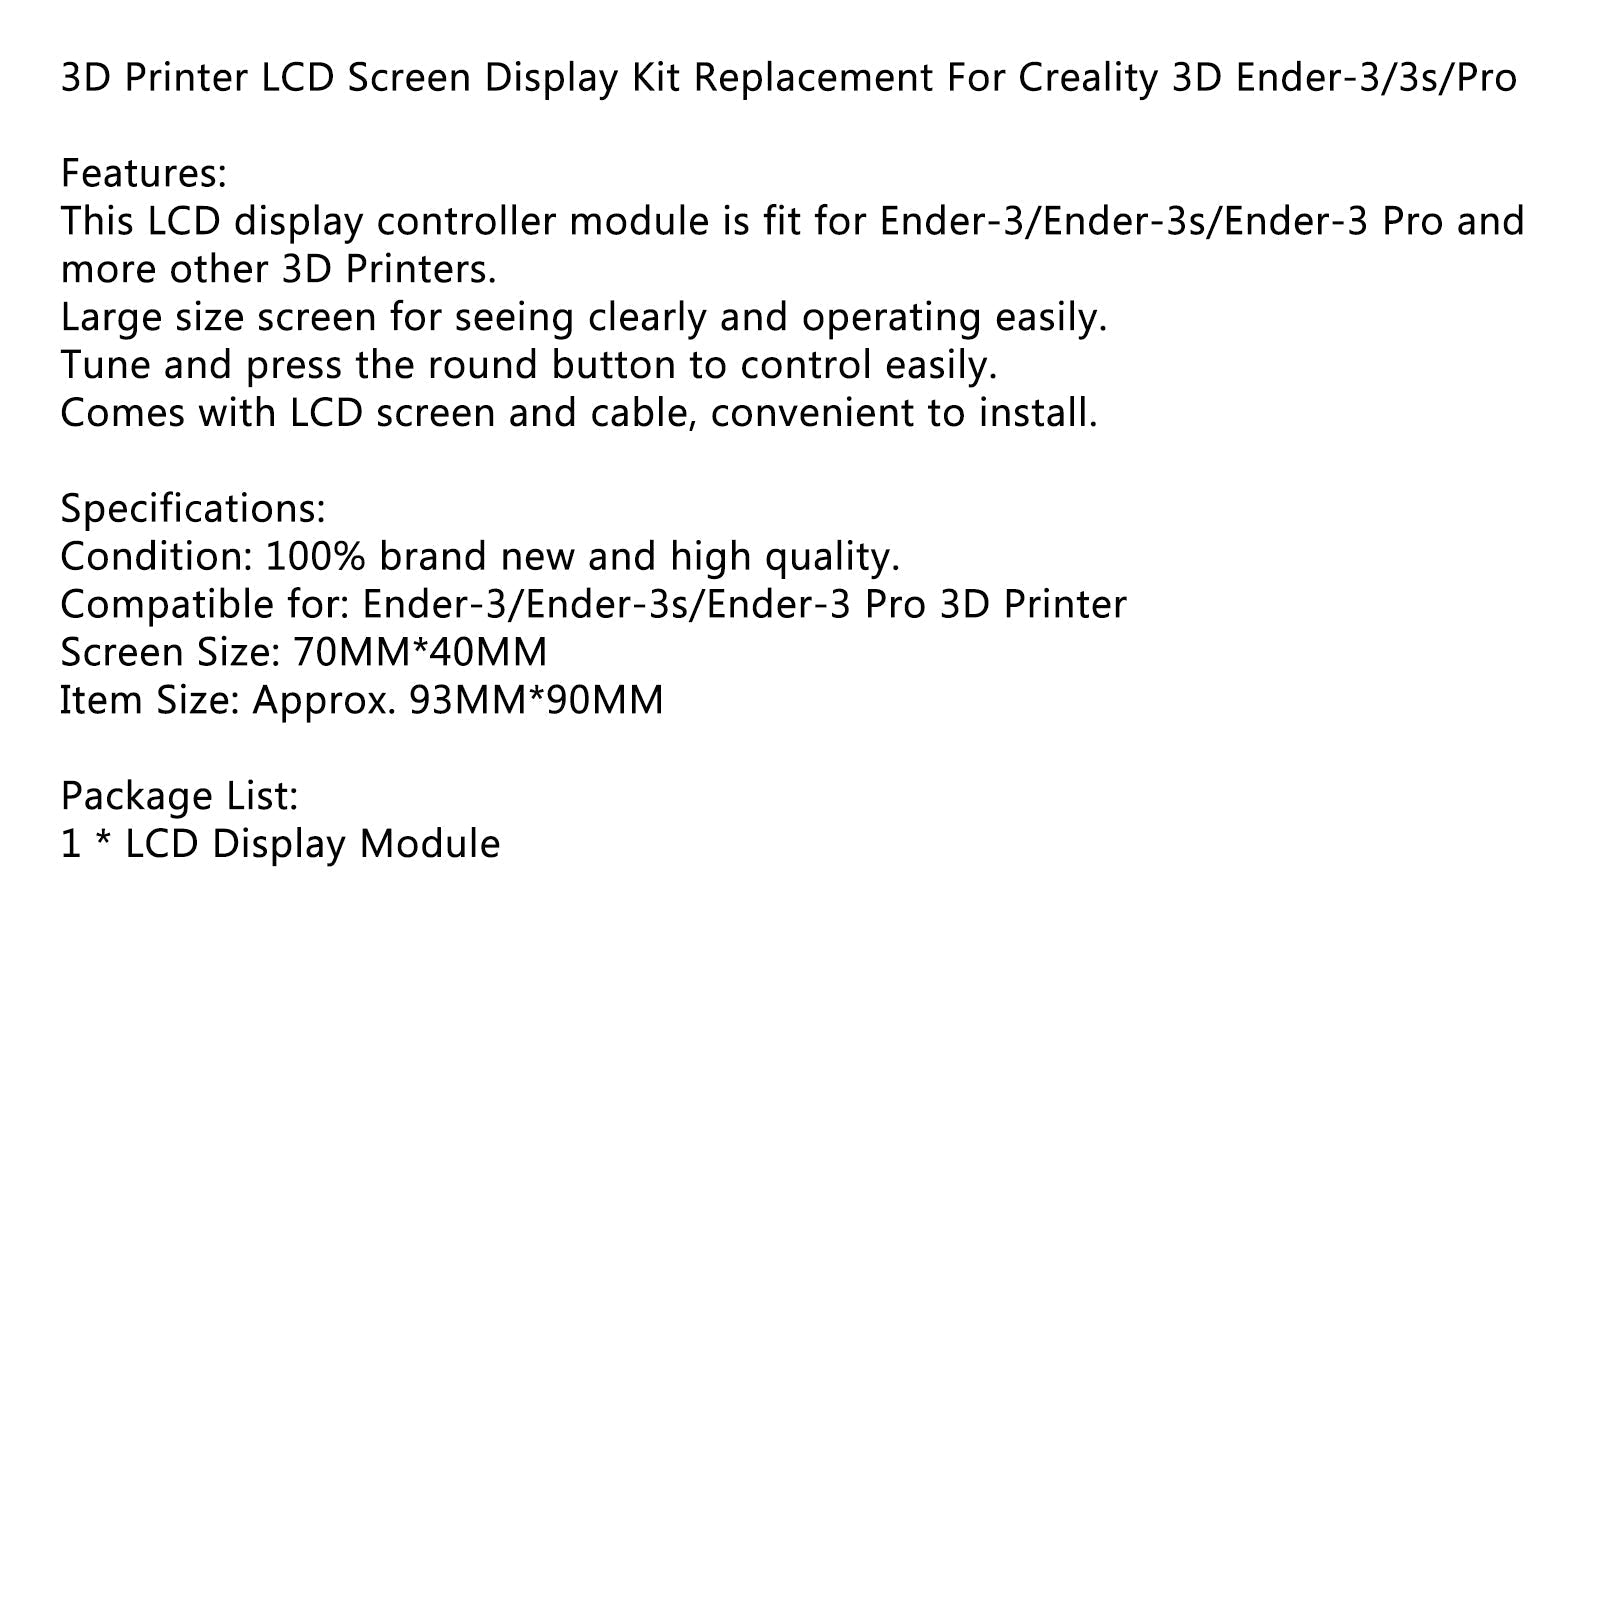 Reemplazo del kit de visualización de pantalla LCD de impresora 3D para Creality 3D Ender-3/3s/Pro